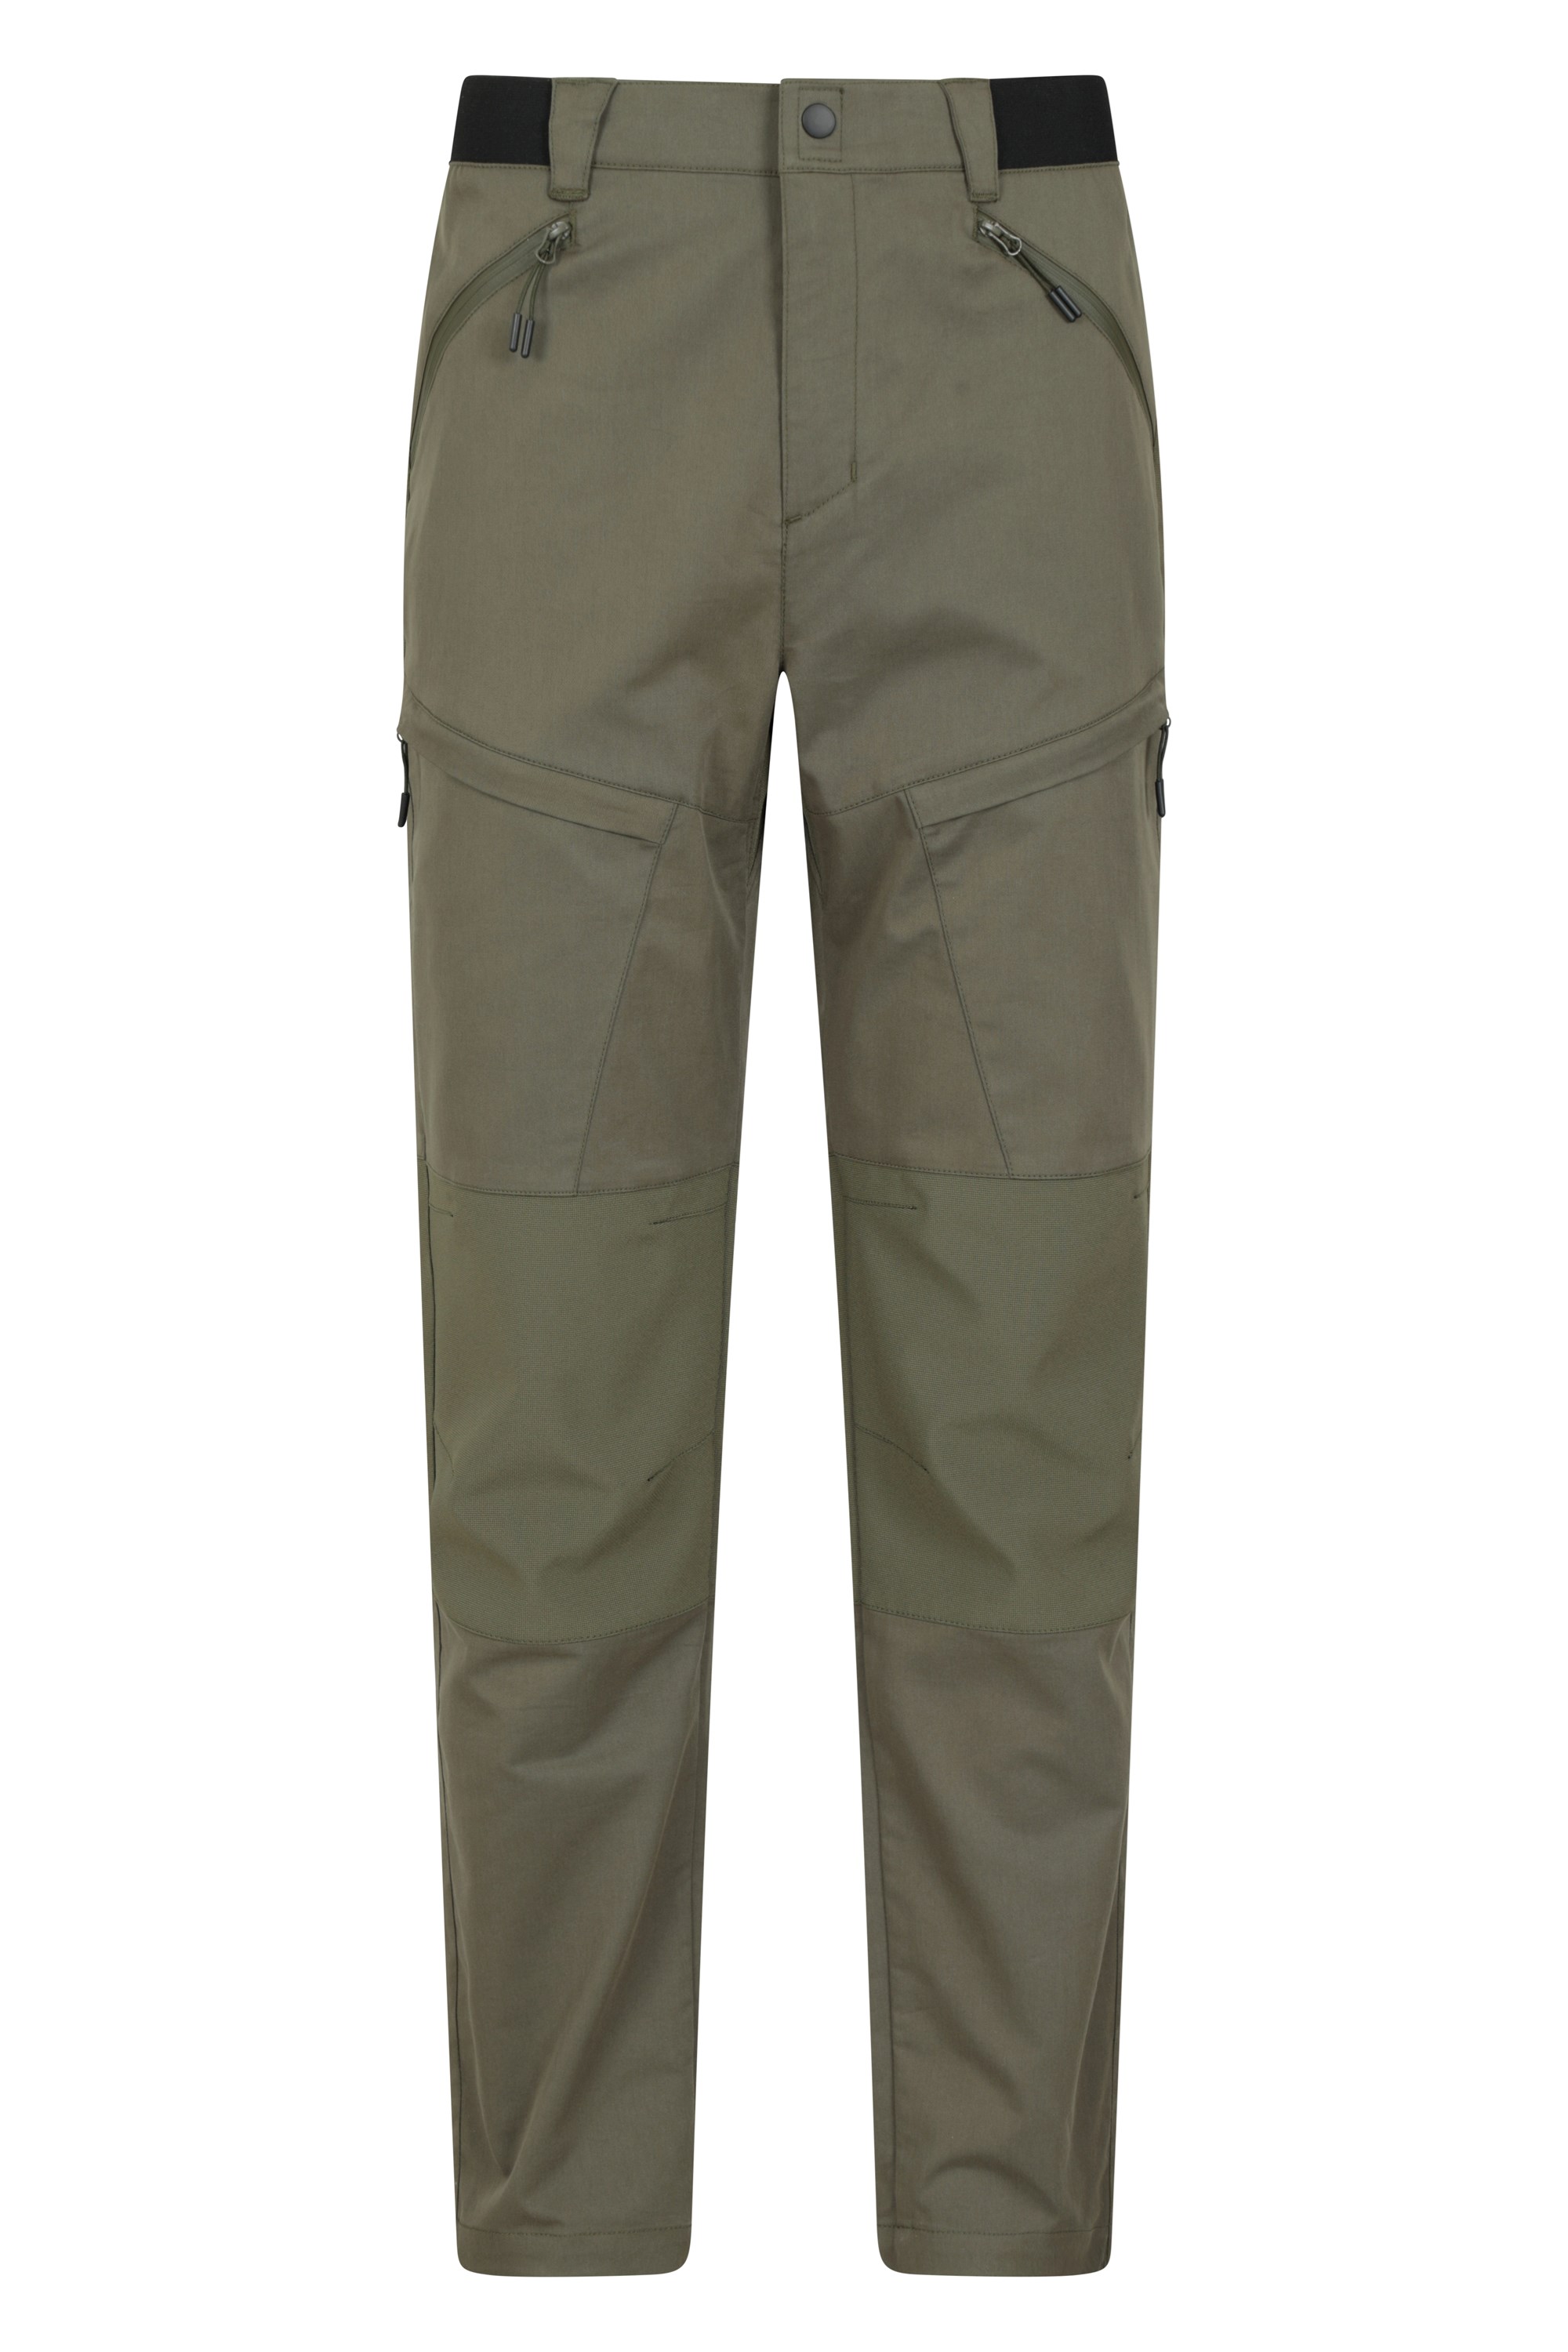 Jungle Mens Trekking Trousers - Short Length - Green